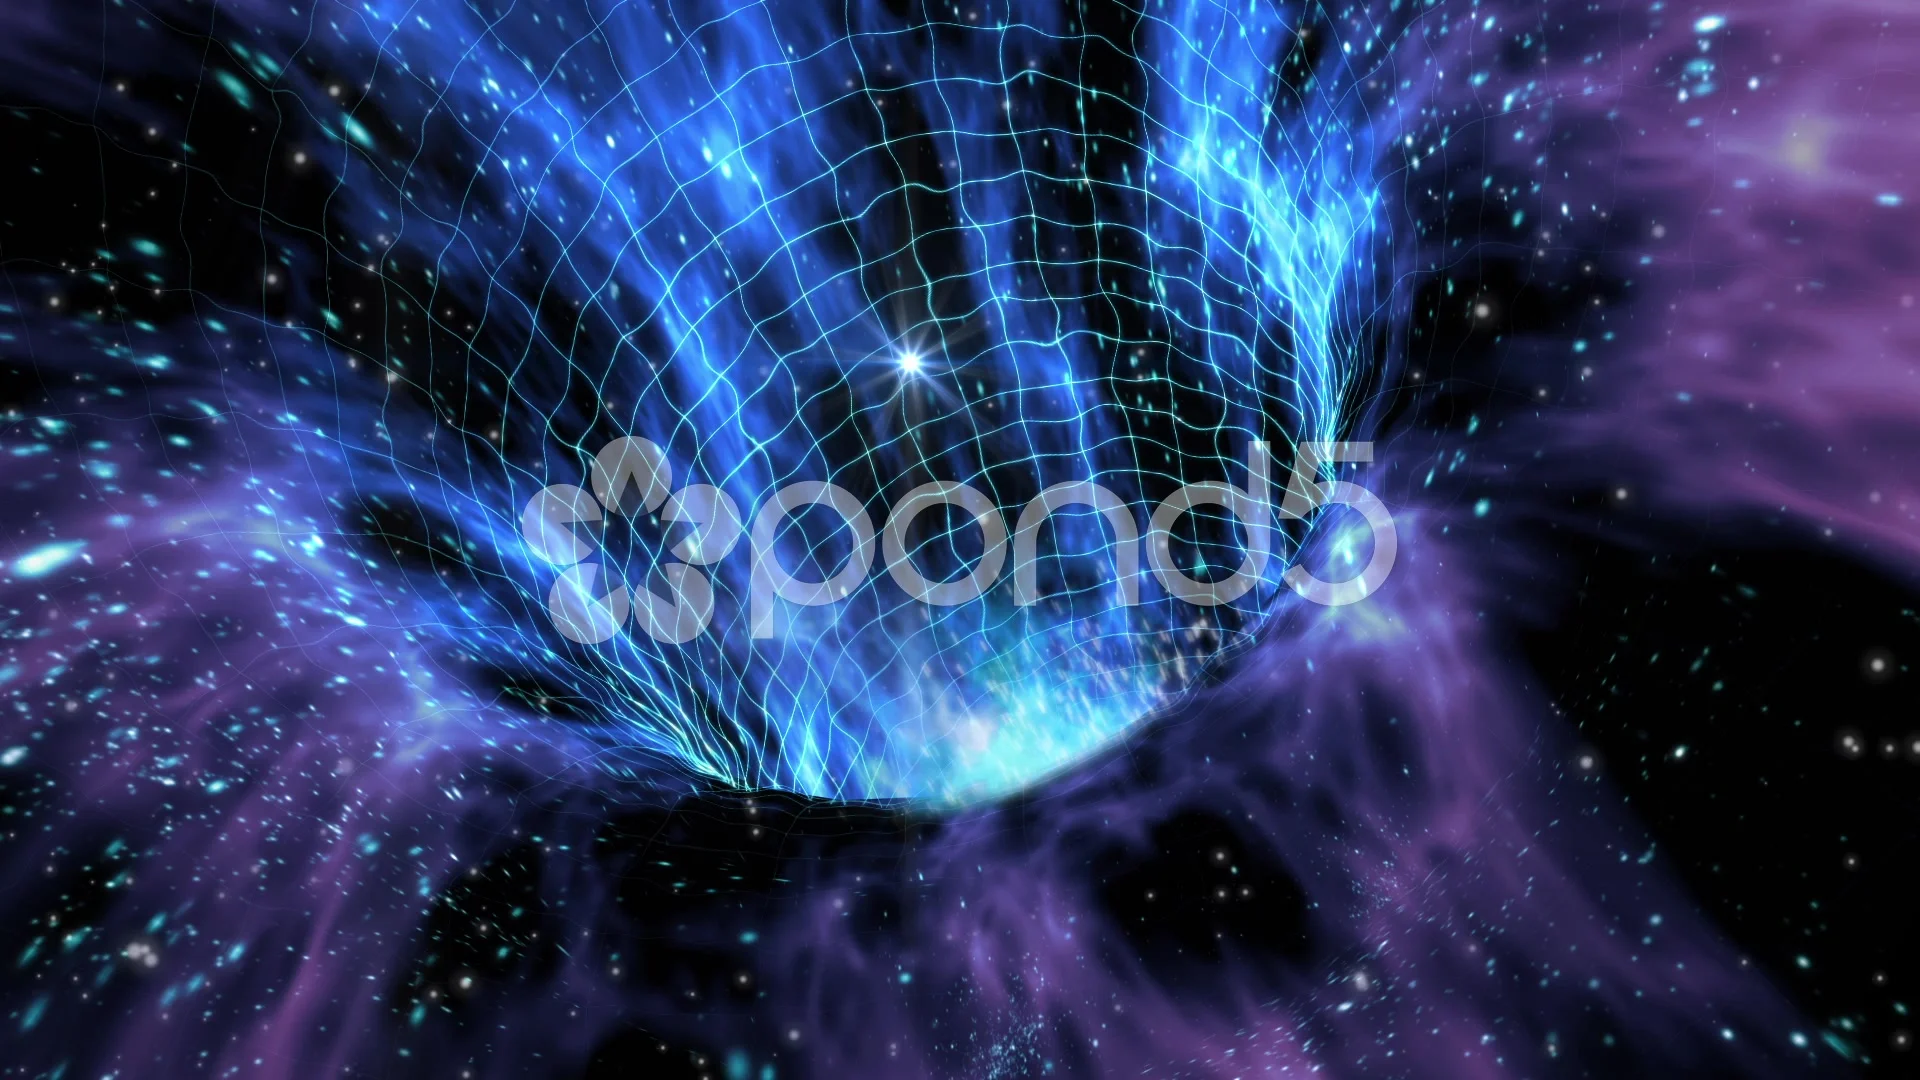 interstellar wormhole wallpaper